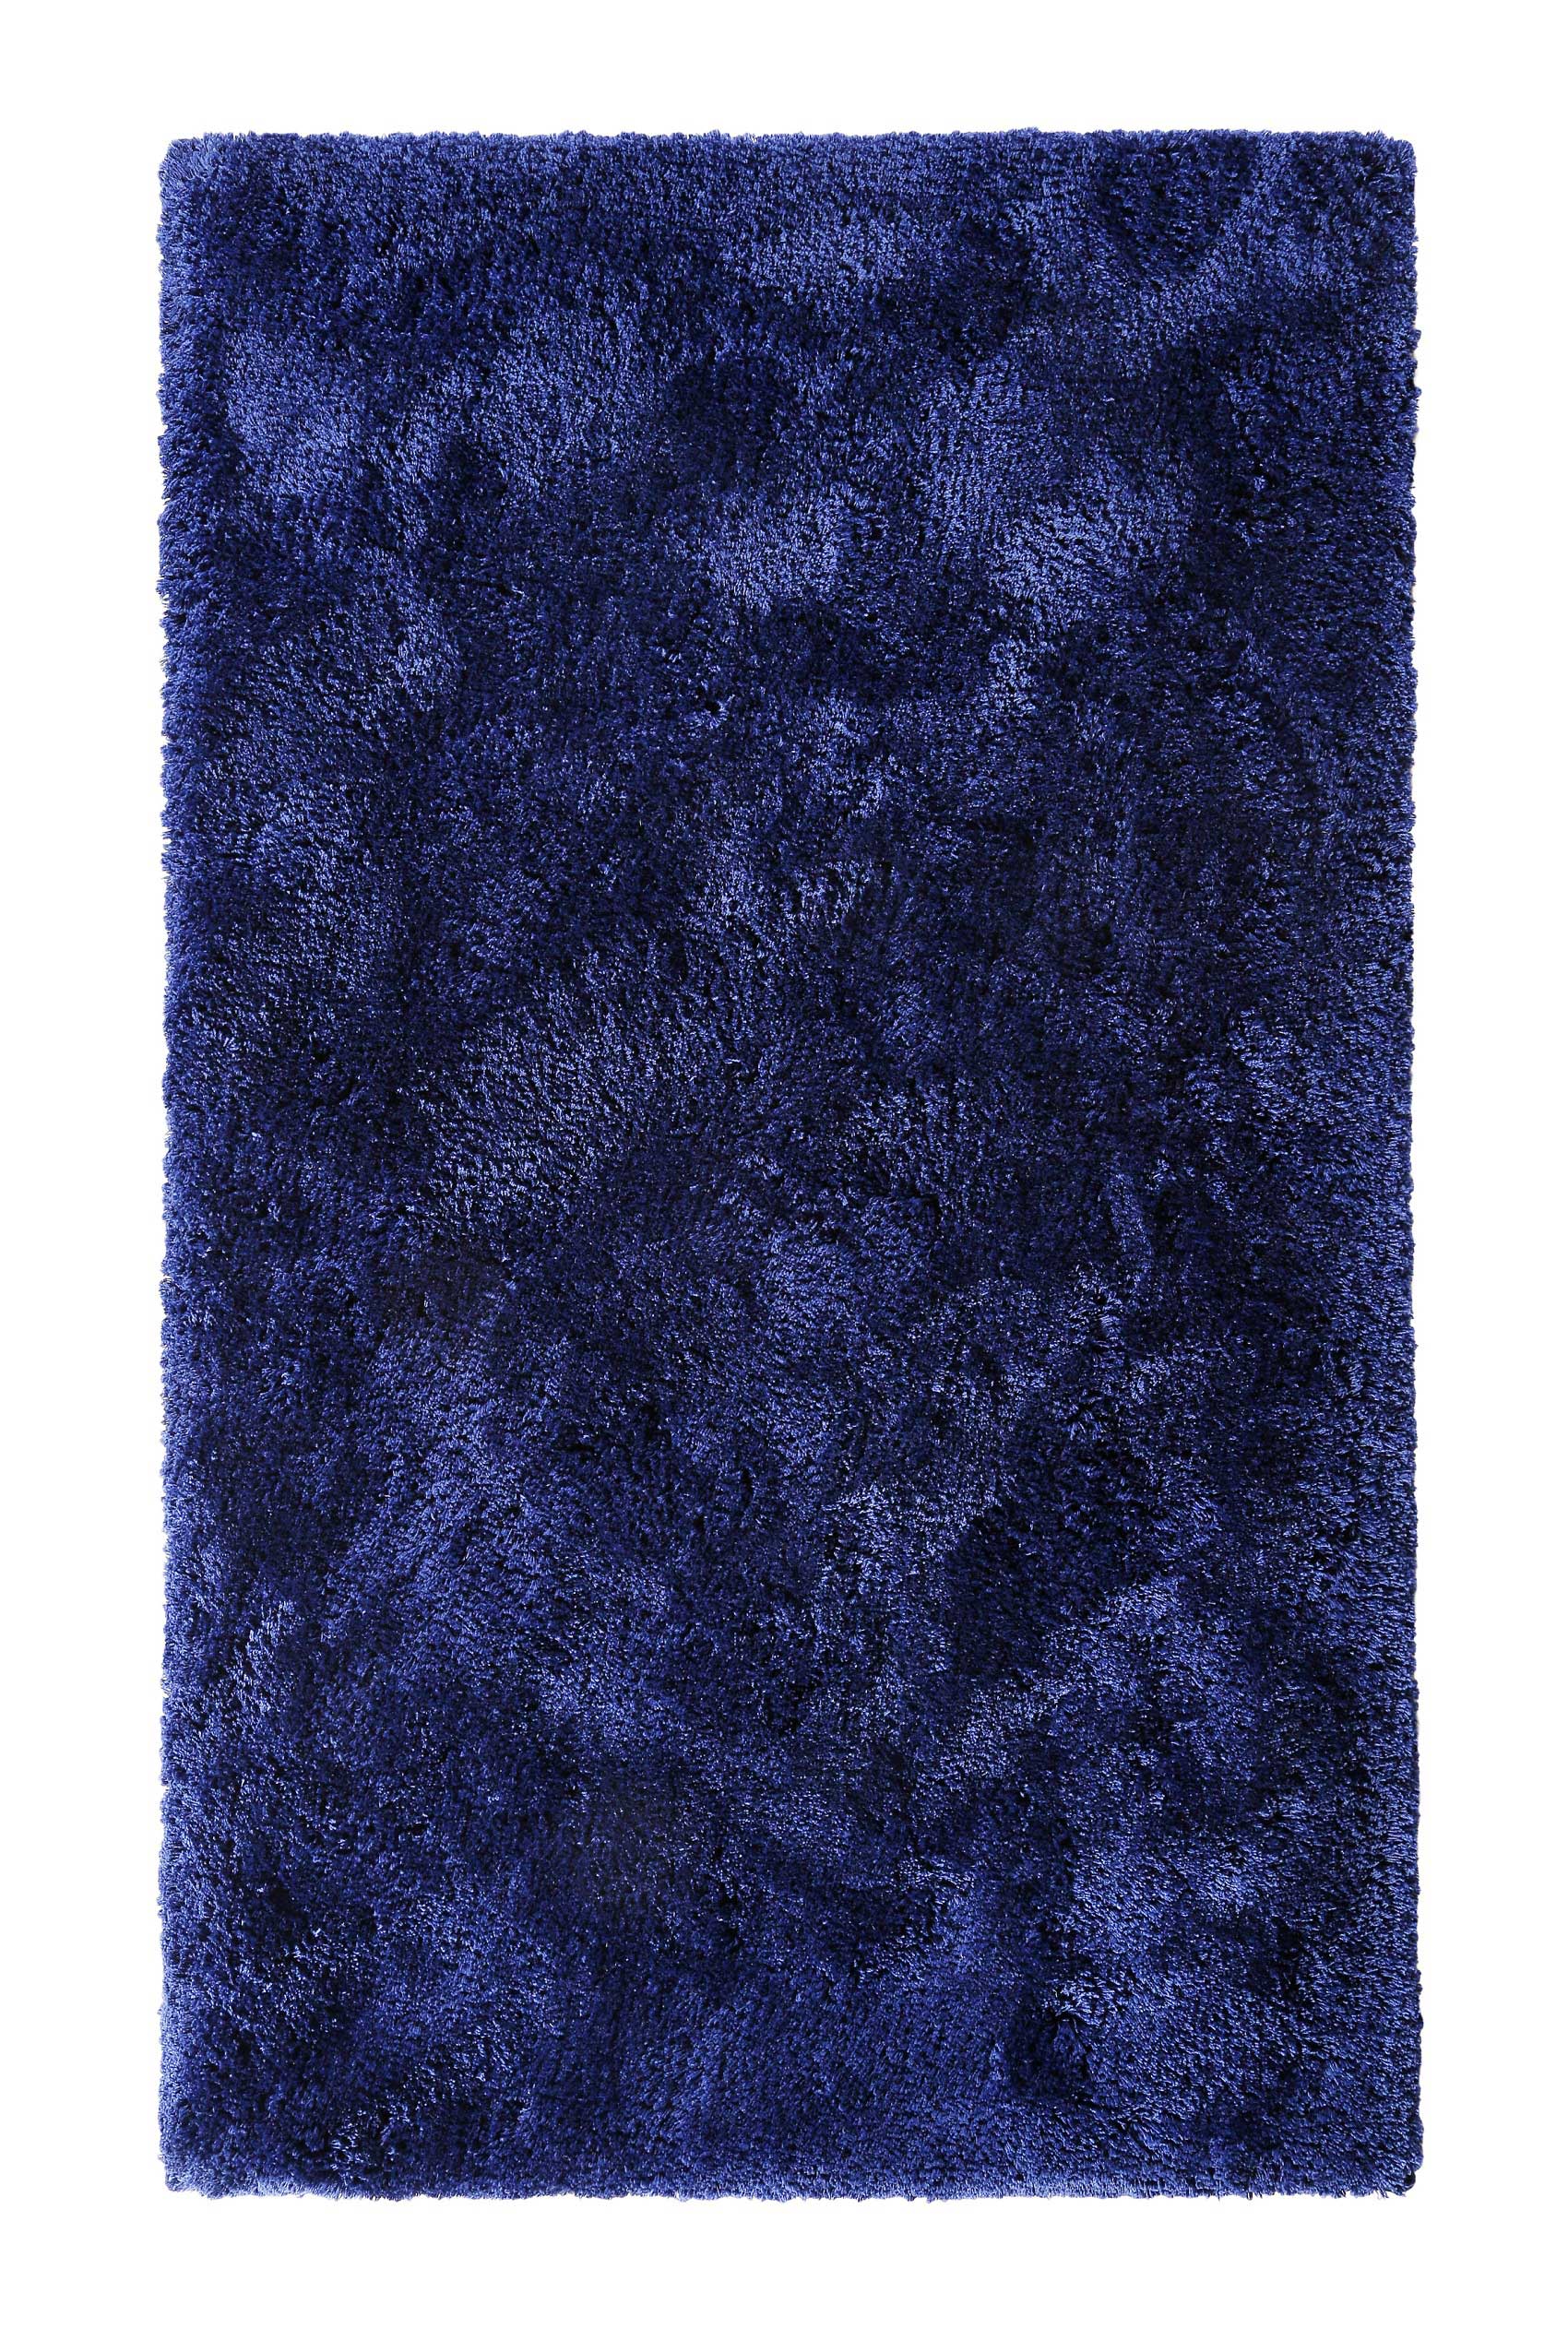 tapis de bain microfibre antidérapant bleu marine 60x100